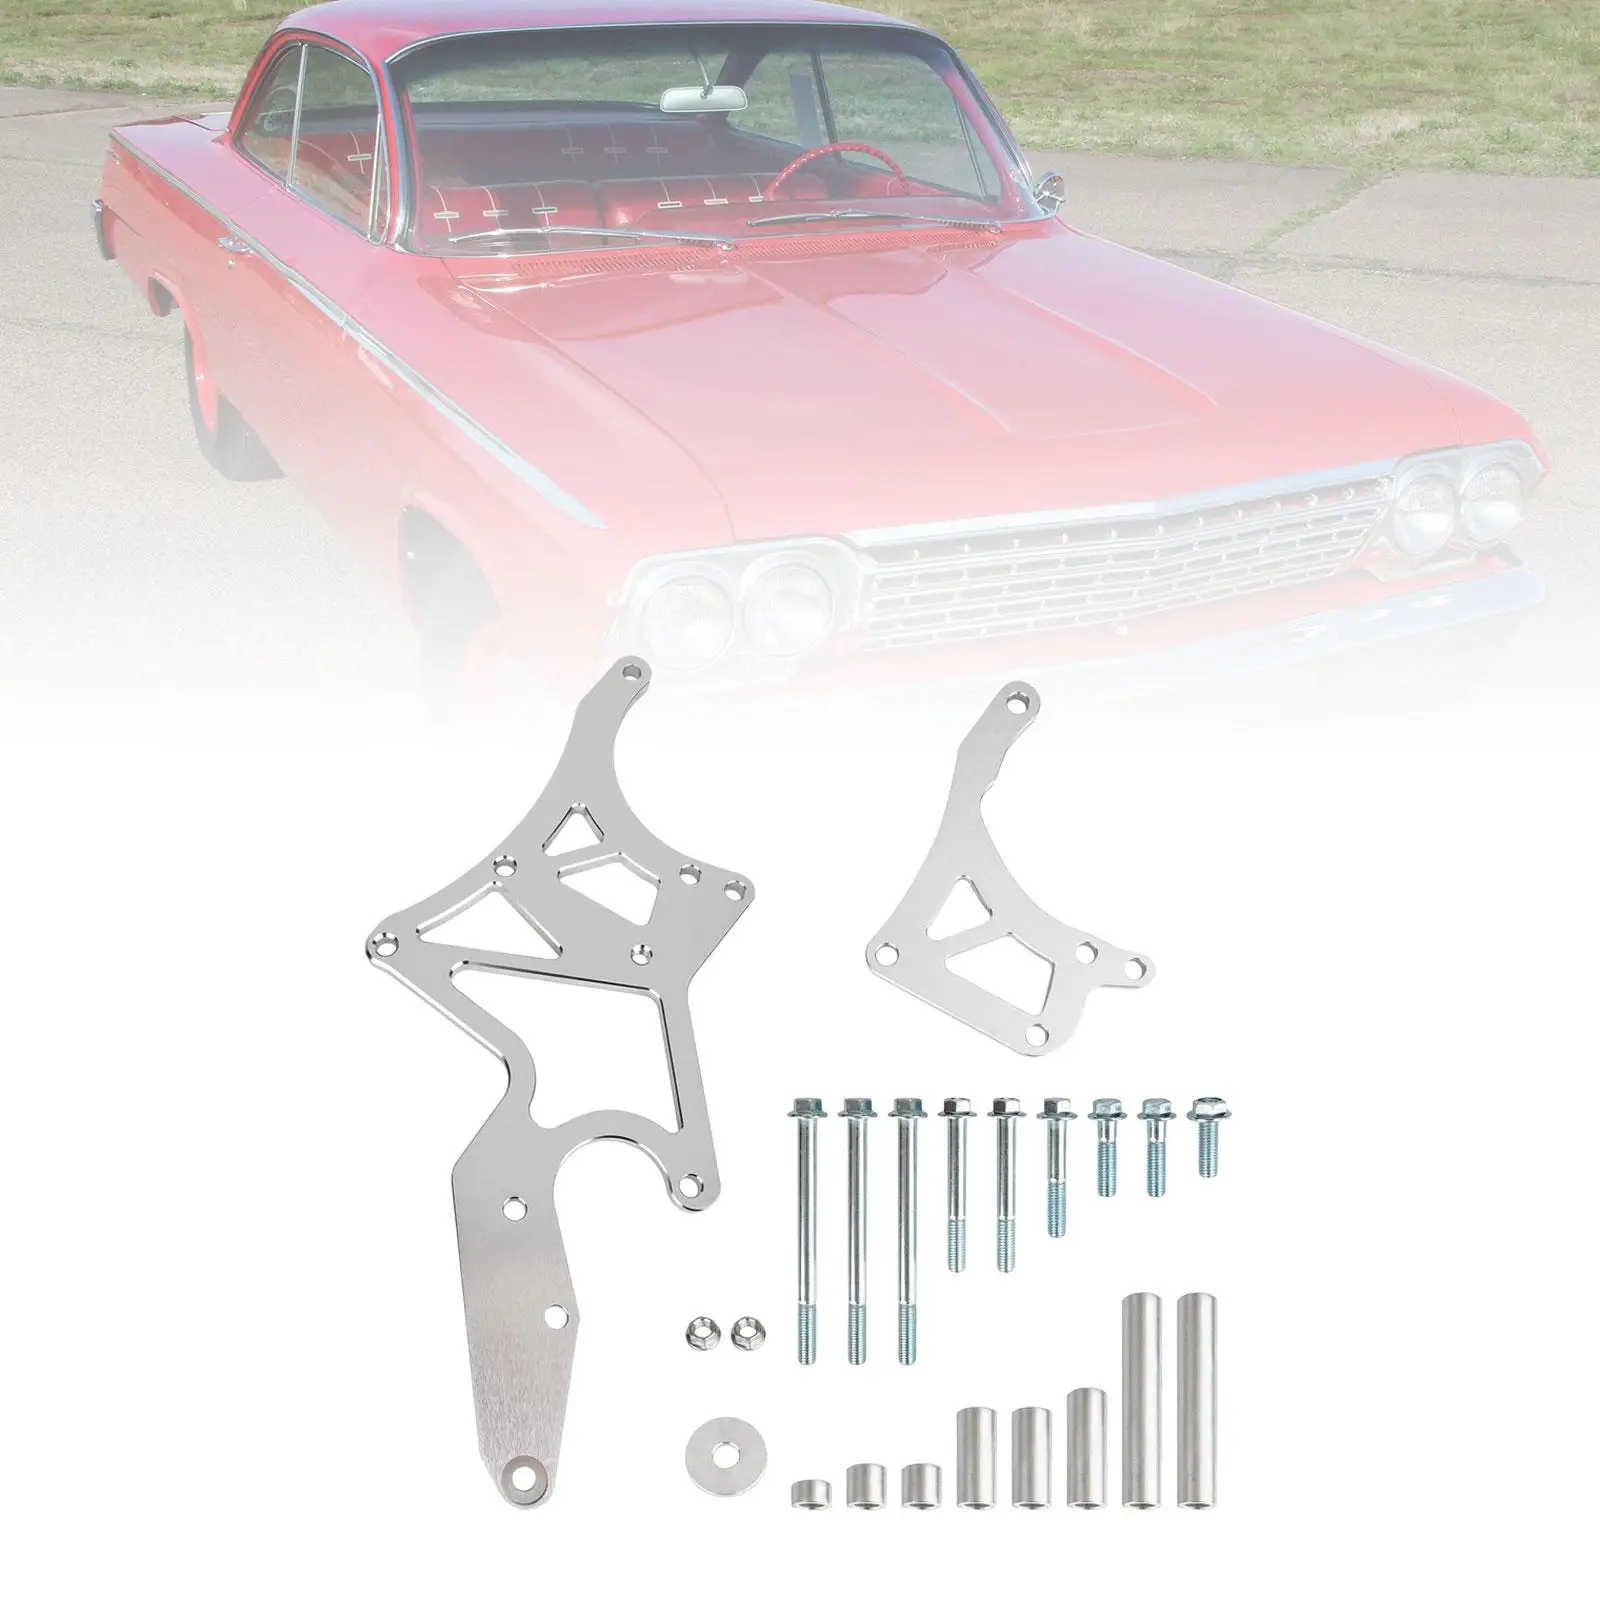 Serpentine Bracket Easy to Install Alternator Power Steering Pump Swap Conversion for Chevrolet Engines